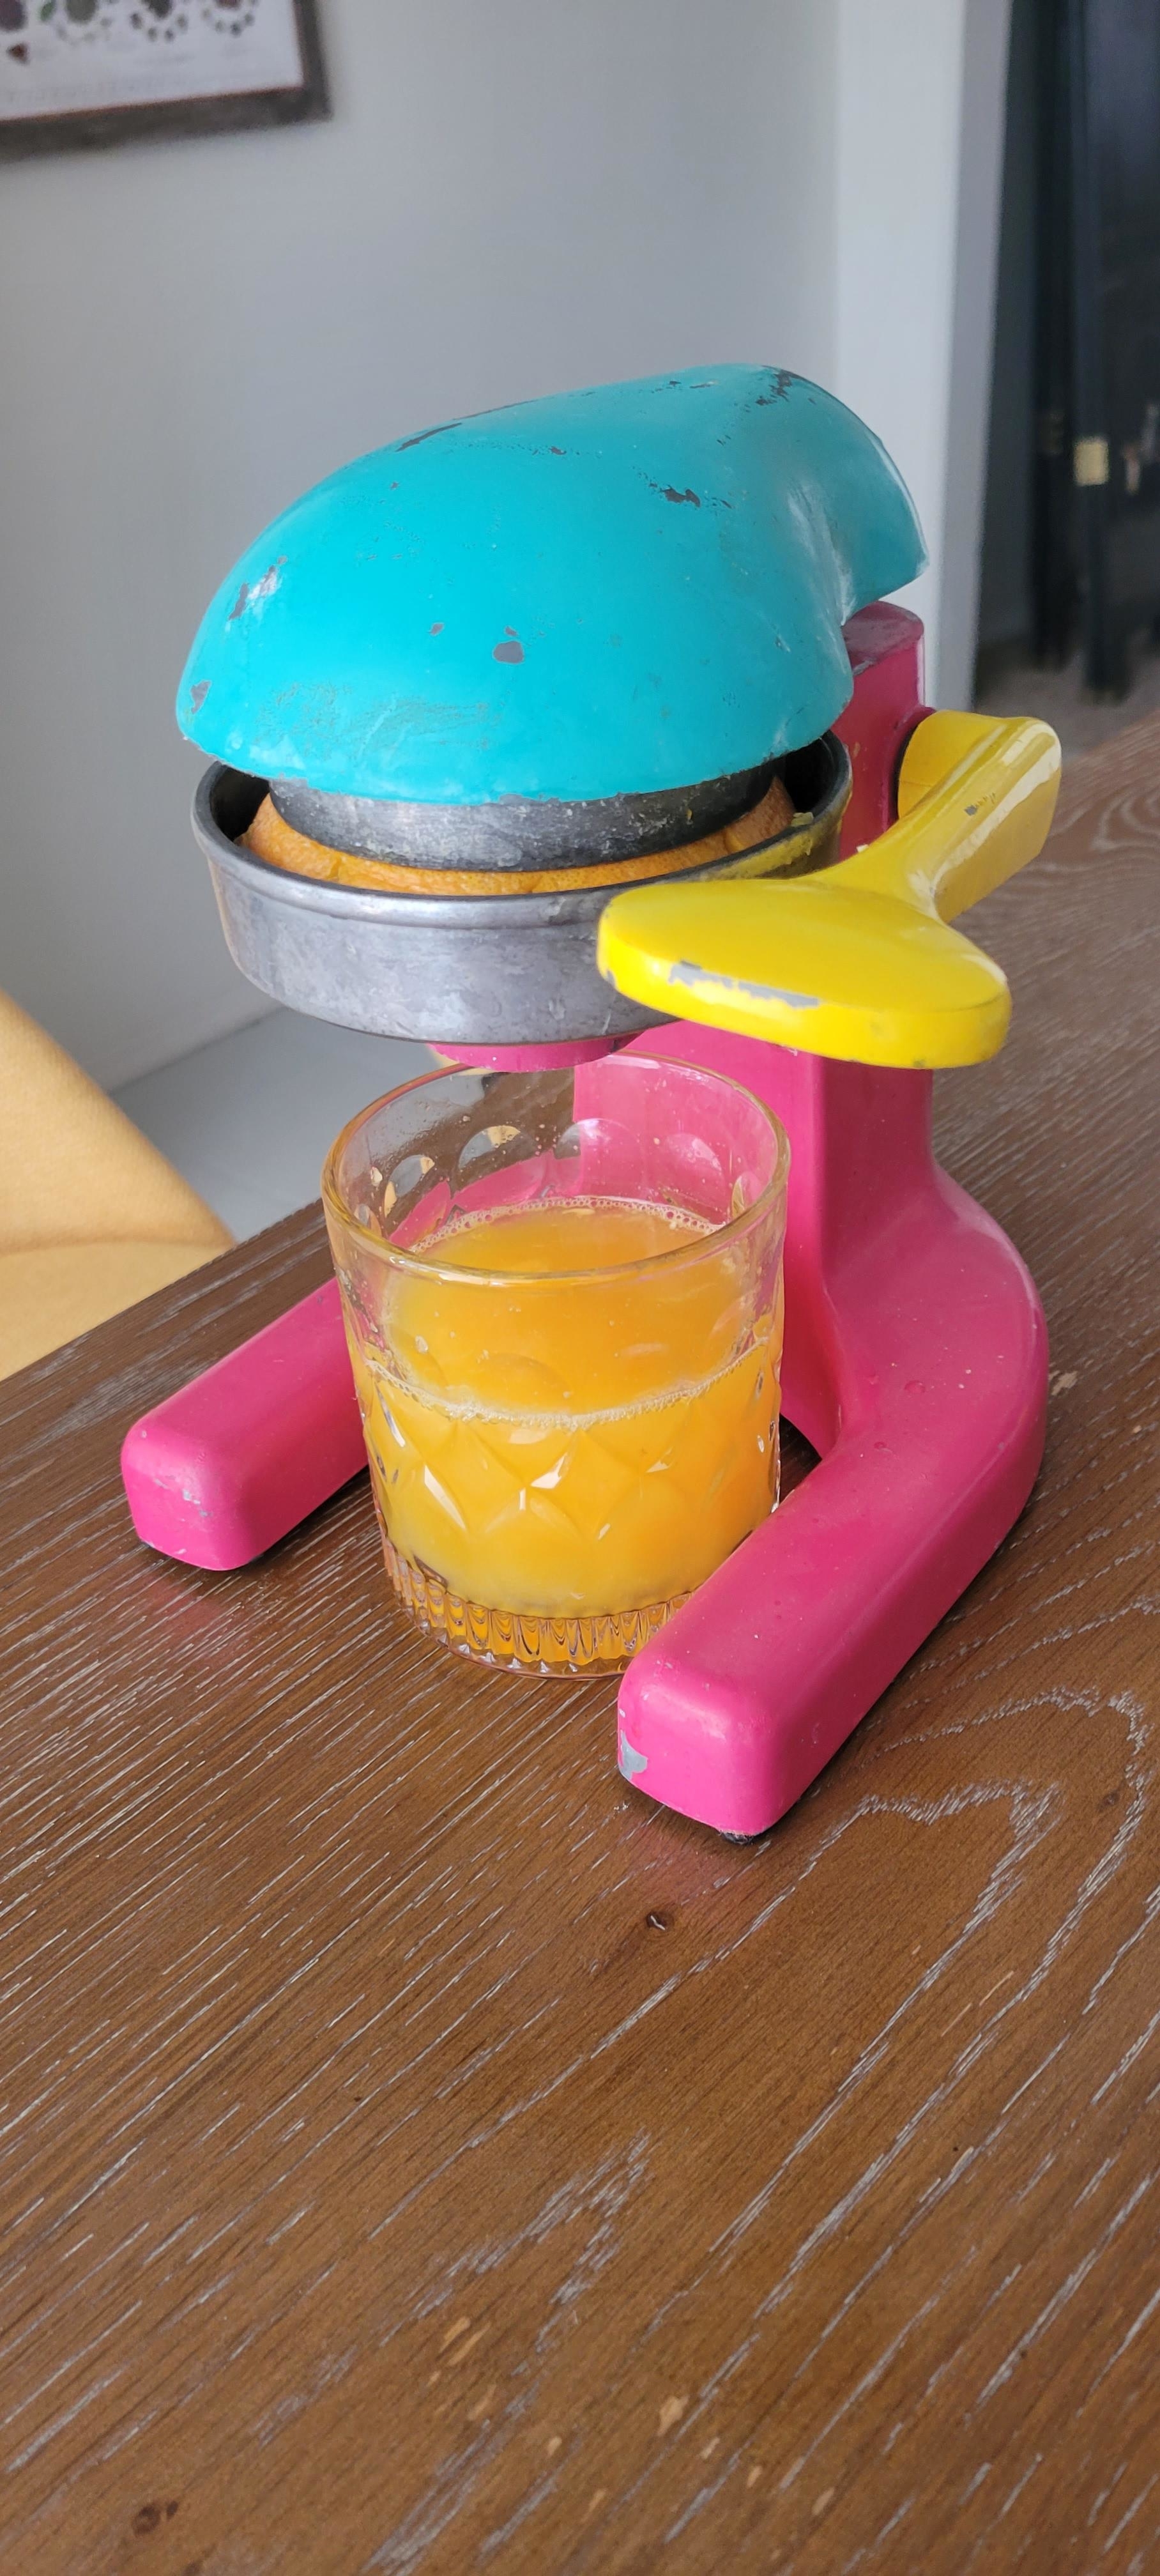 glass of fresh orange juice underneath a juicer